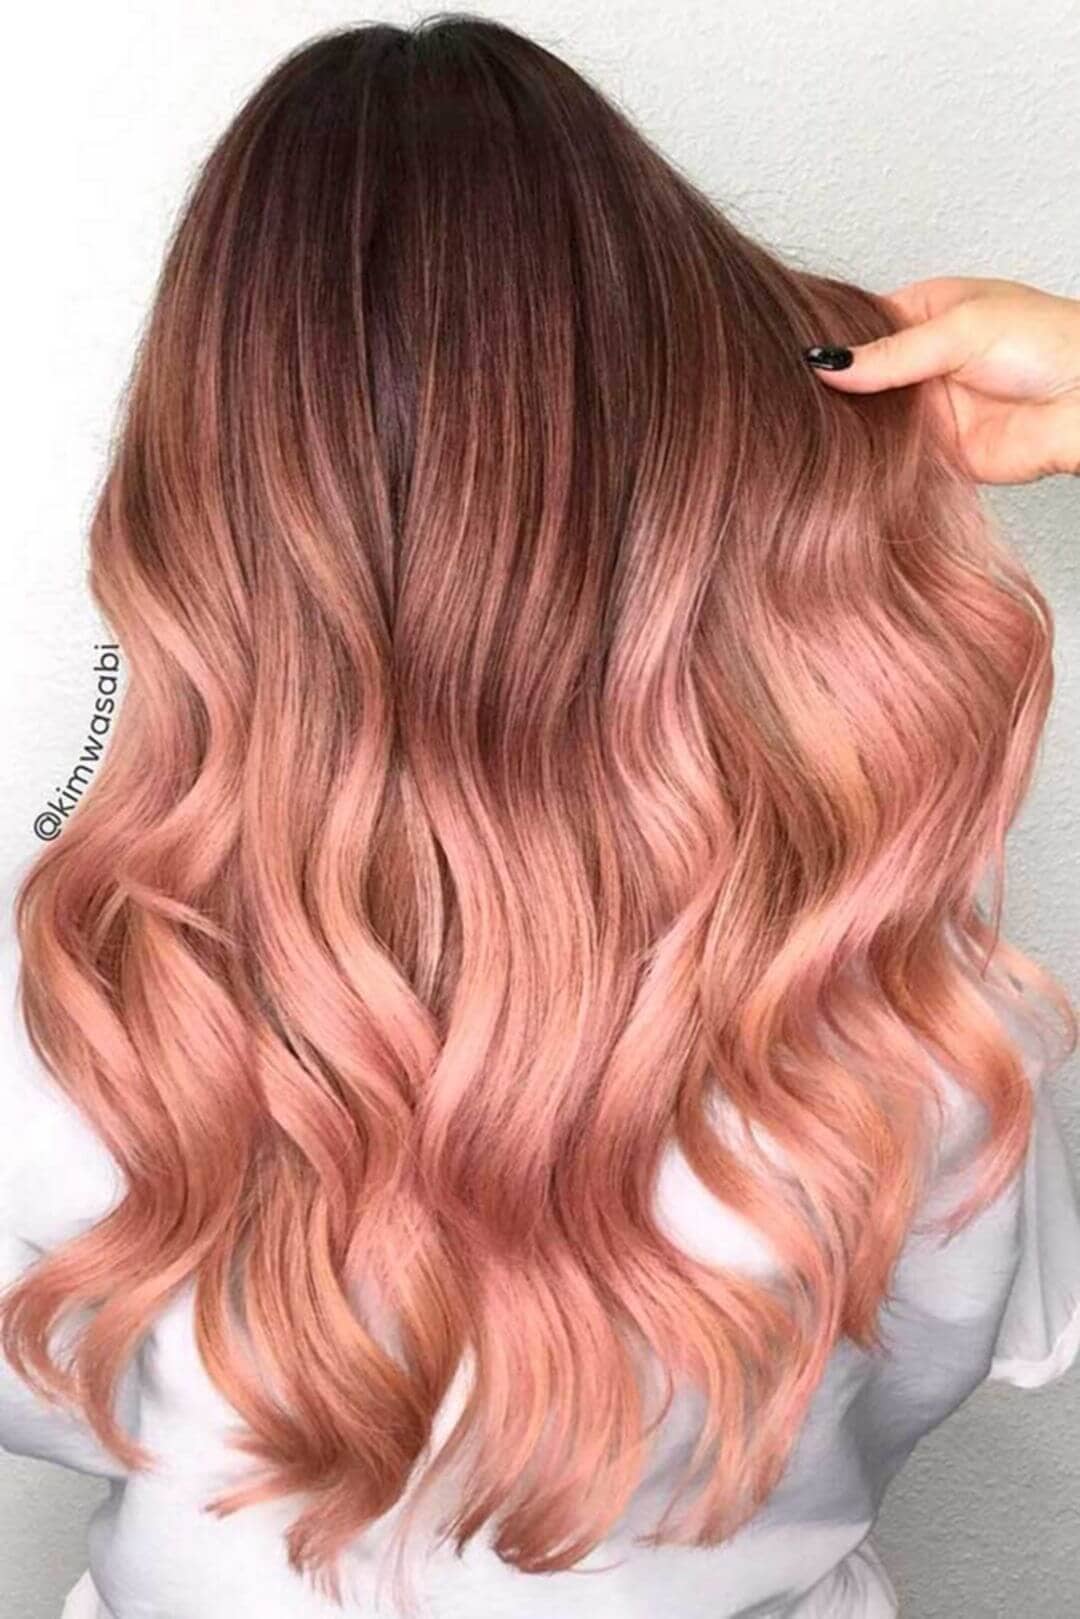 Dark Brunette to Rose Gold Hair Ombre